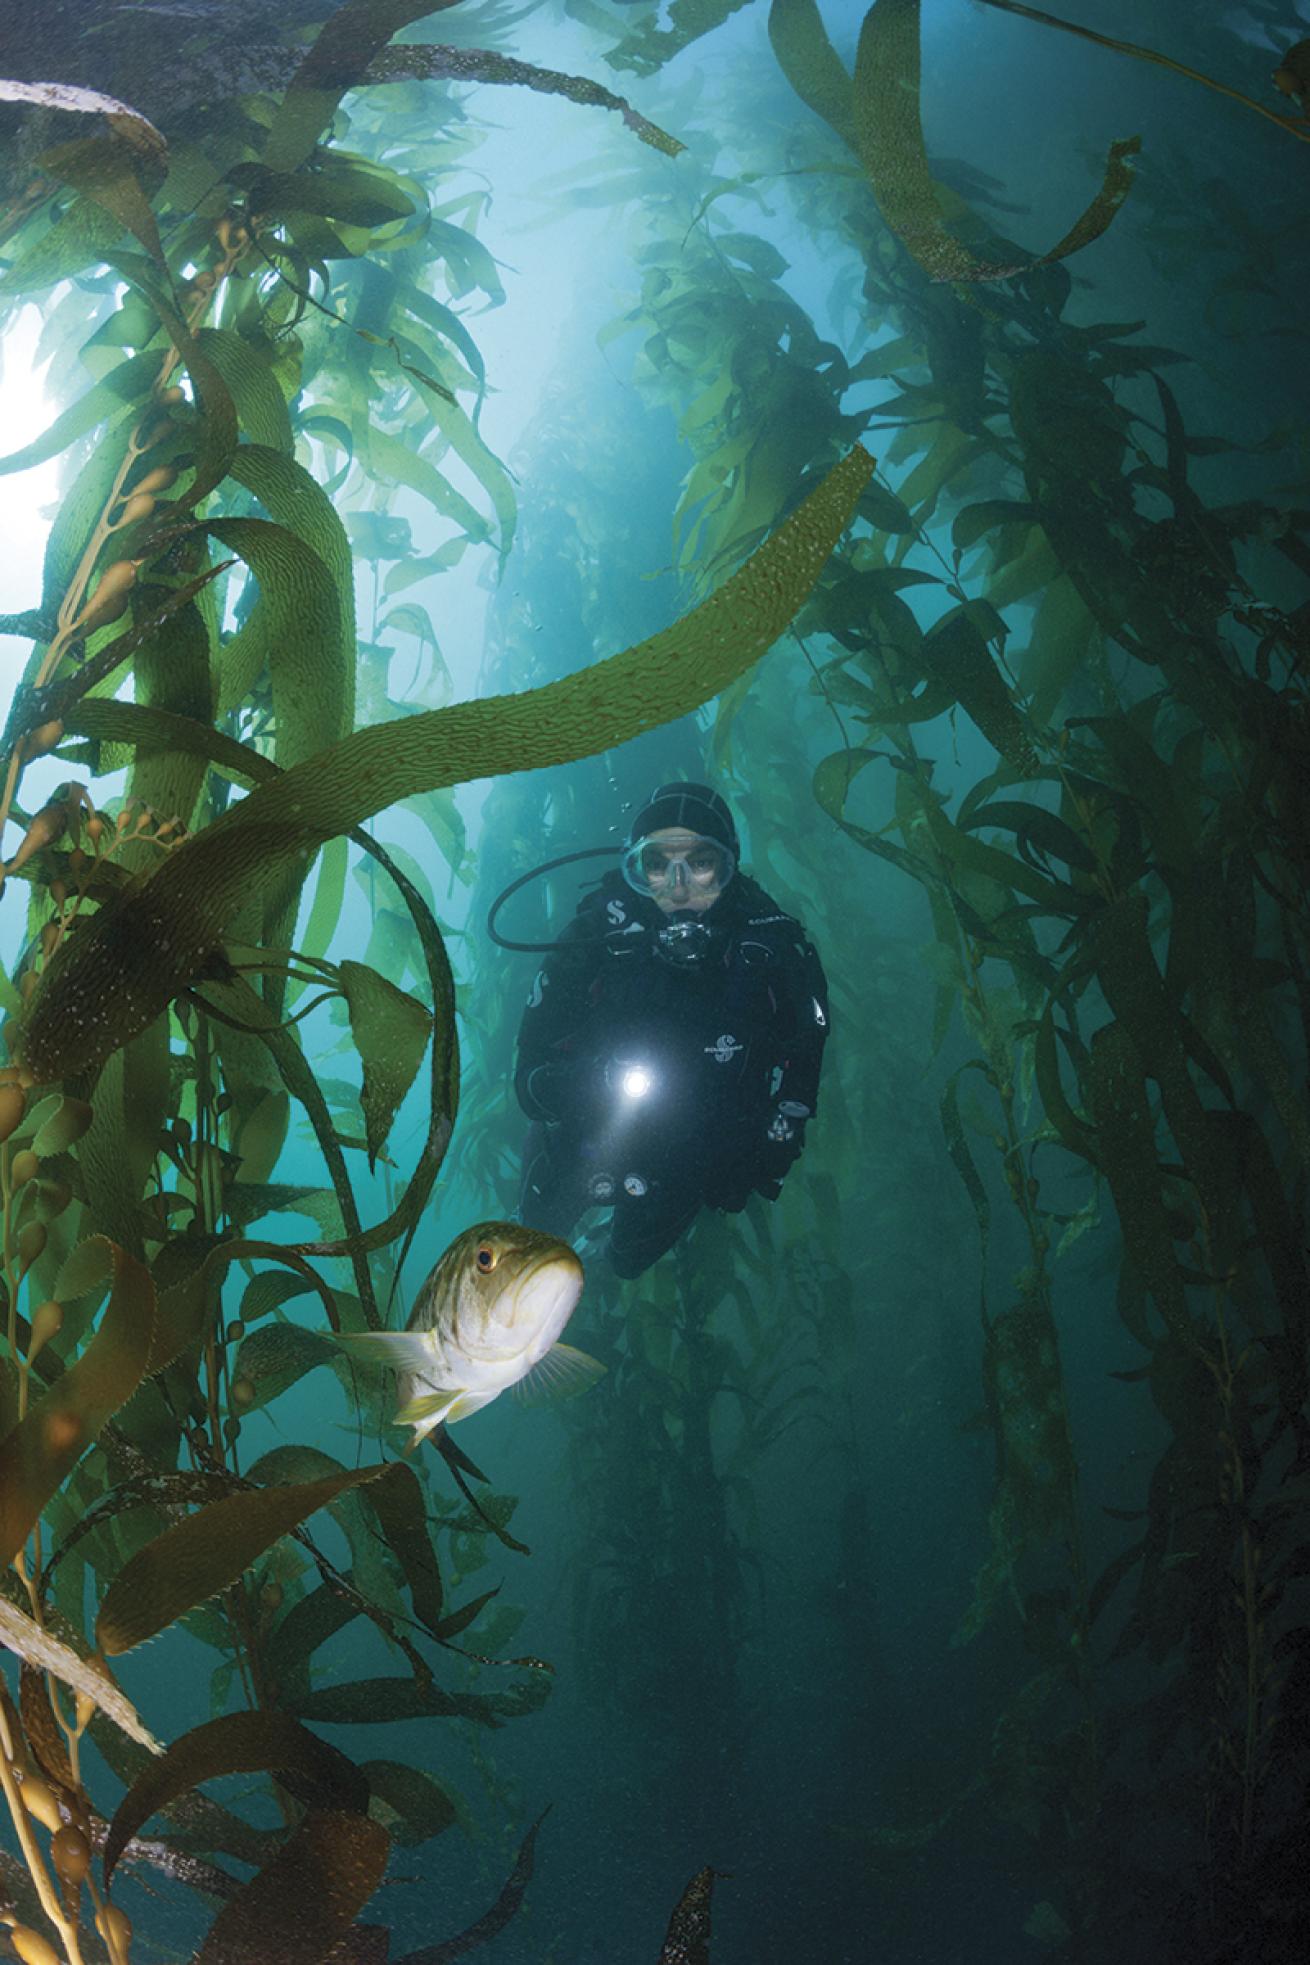 Diver off coast of California shines light at a fish.